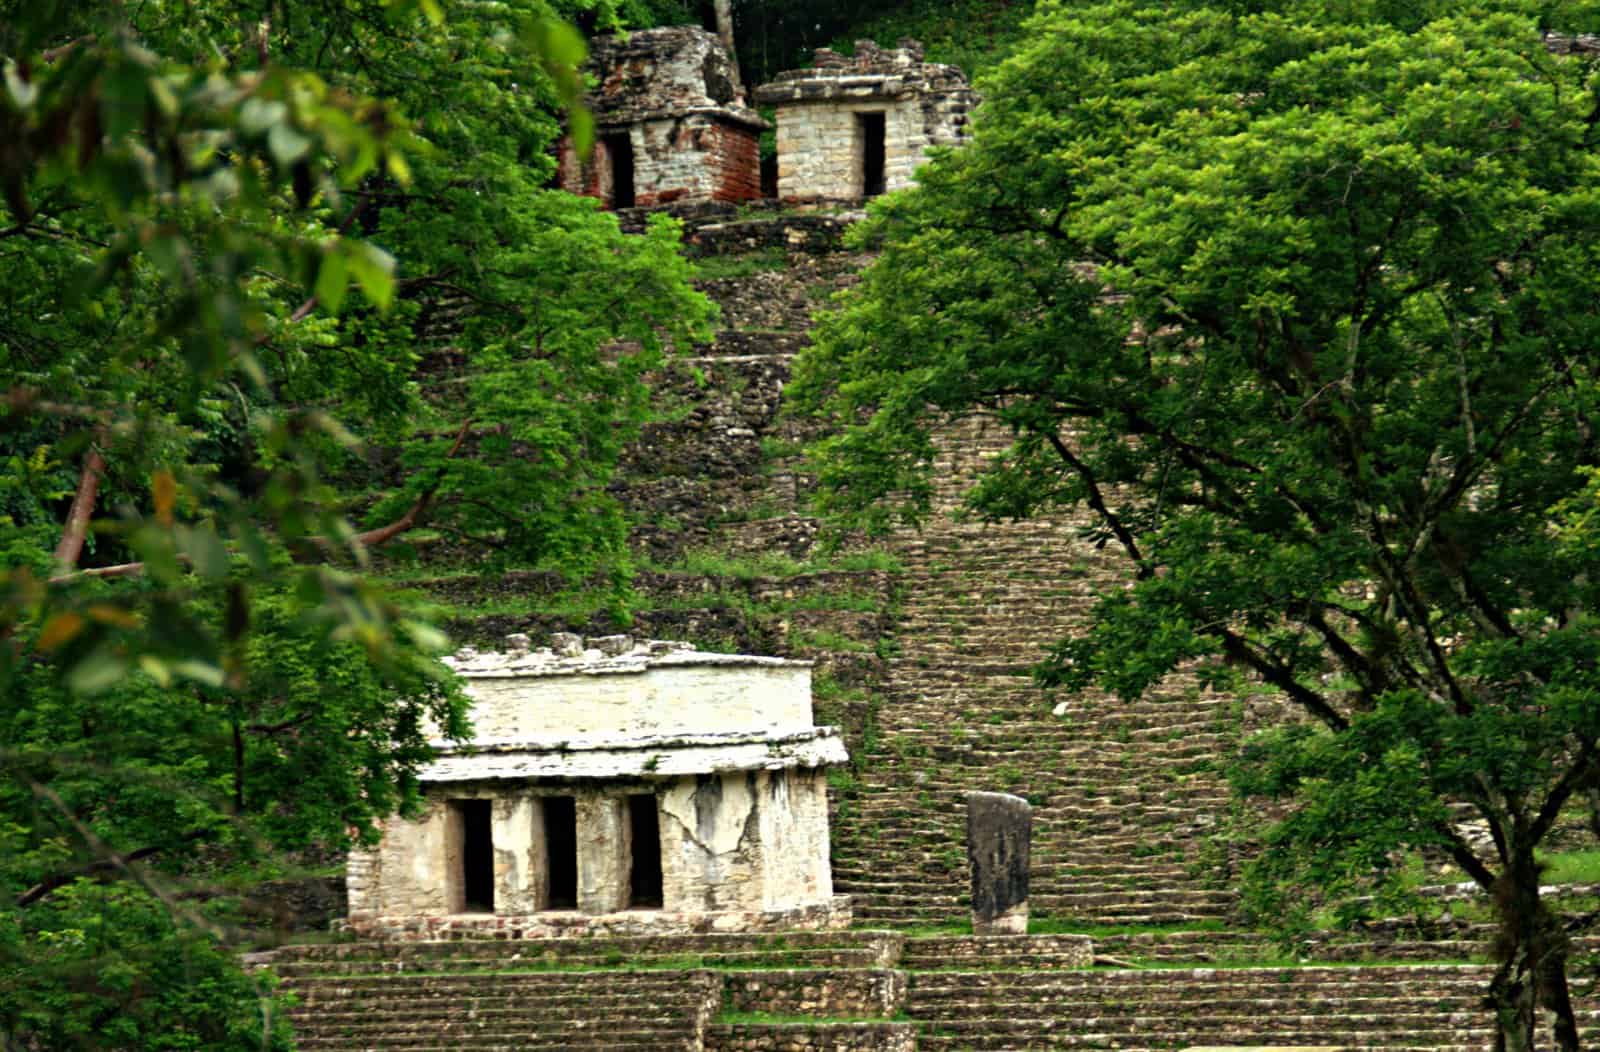 Bonampak - Main Pyramid with several Temples